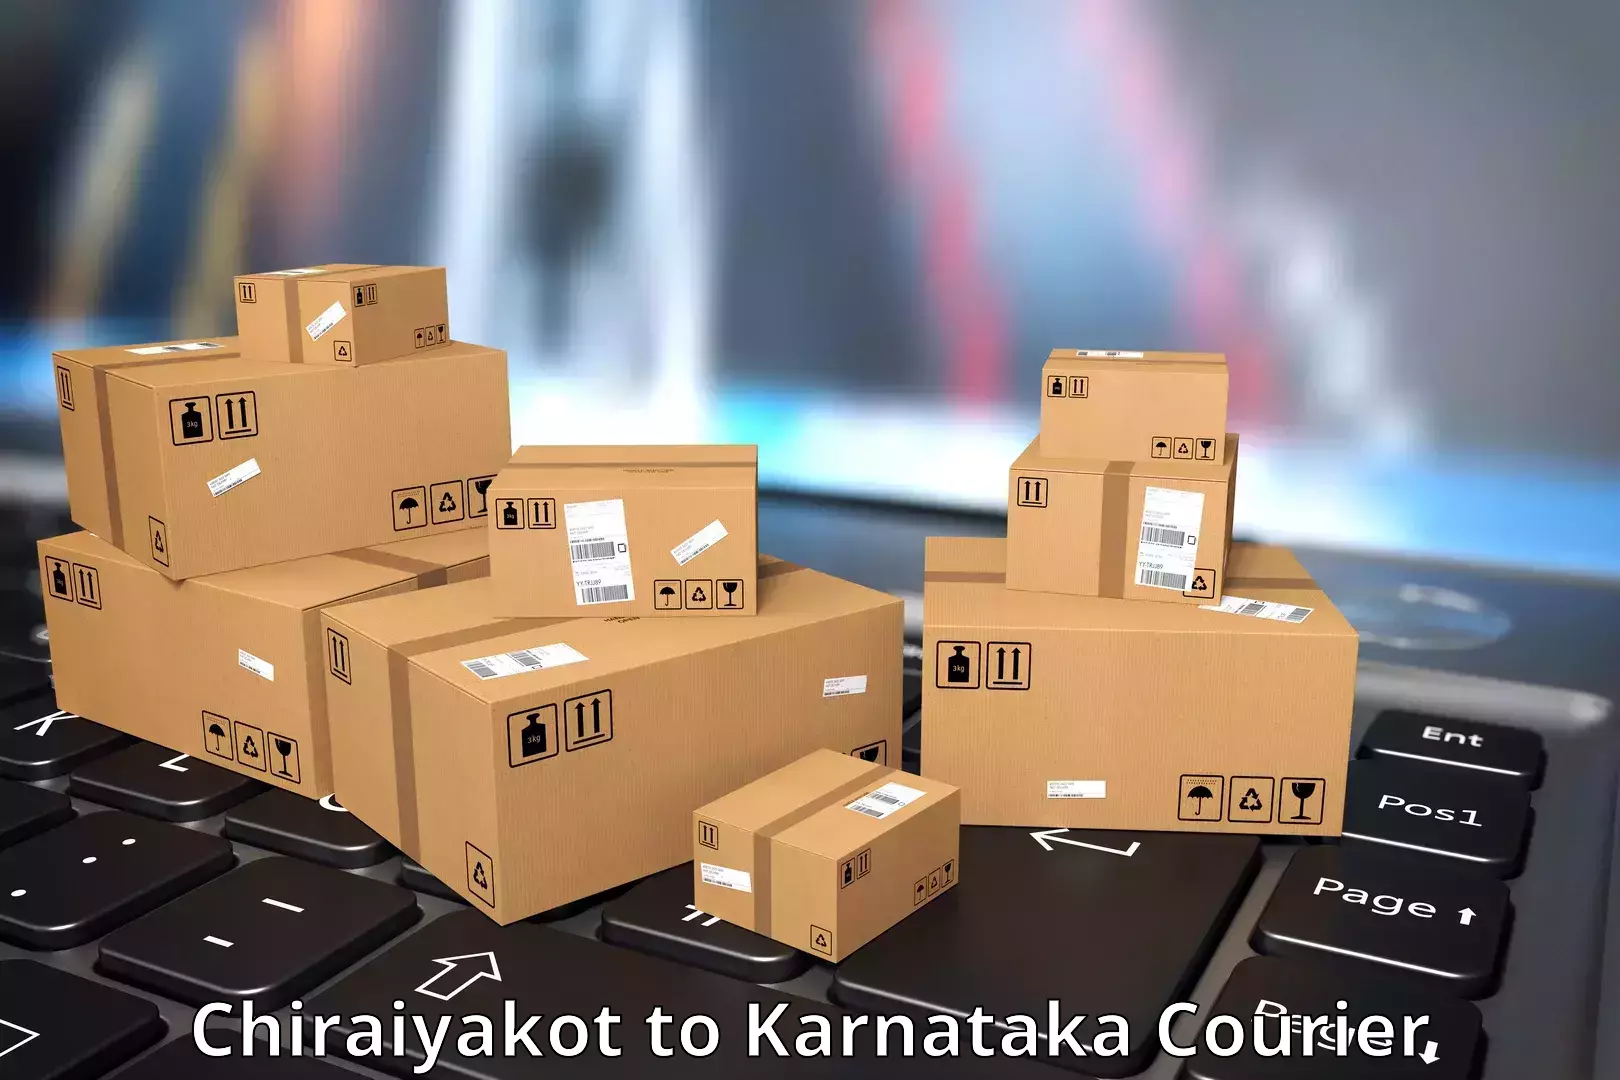 On-demand shipping options Chiraiyakot to Karnataka